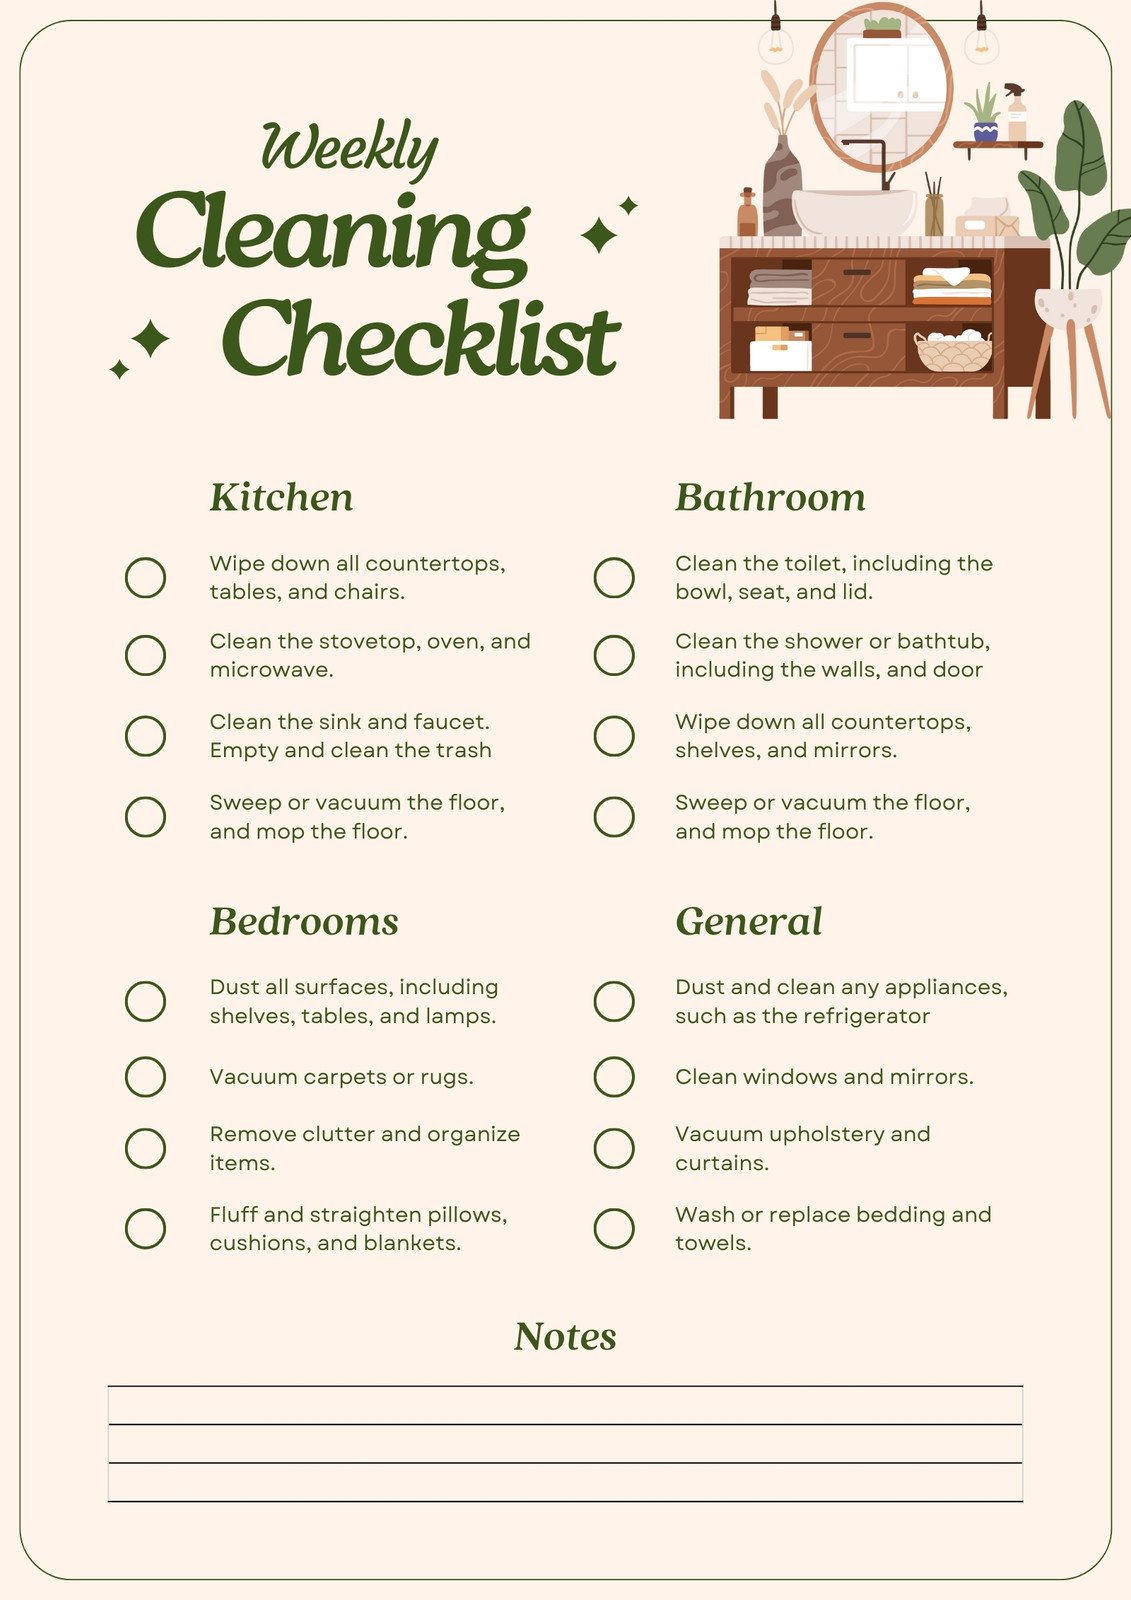 https://marketplace.canva.com/EAFvMowKw_E/1/0/1131w/canva-green-beige-minimalist-weekly-cleaning-checklist-1pbXcz2XfJQ.jpg